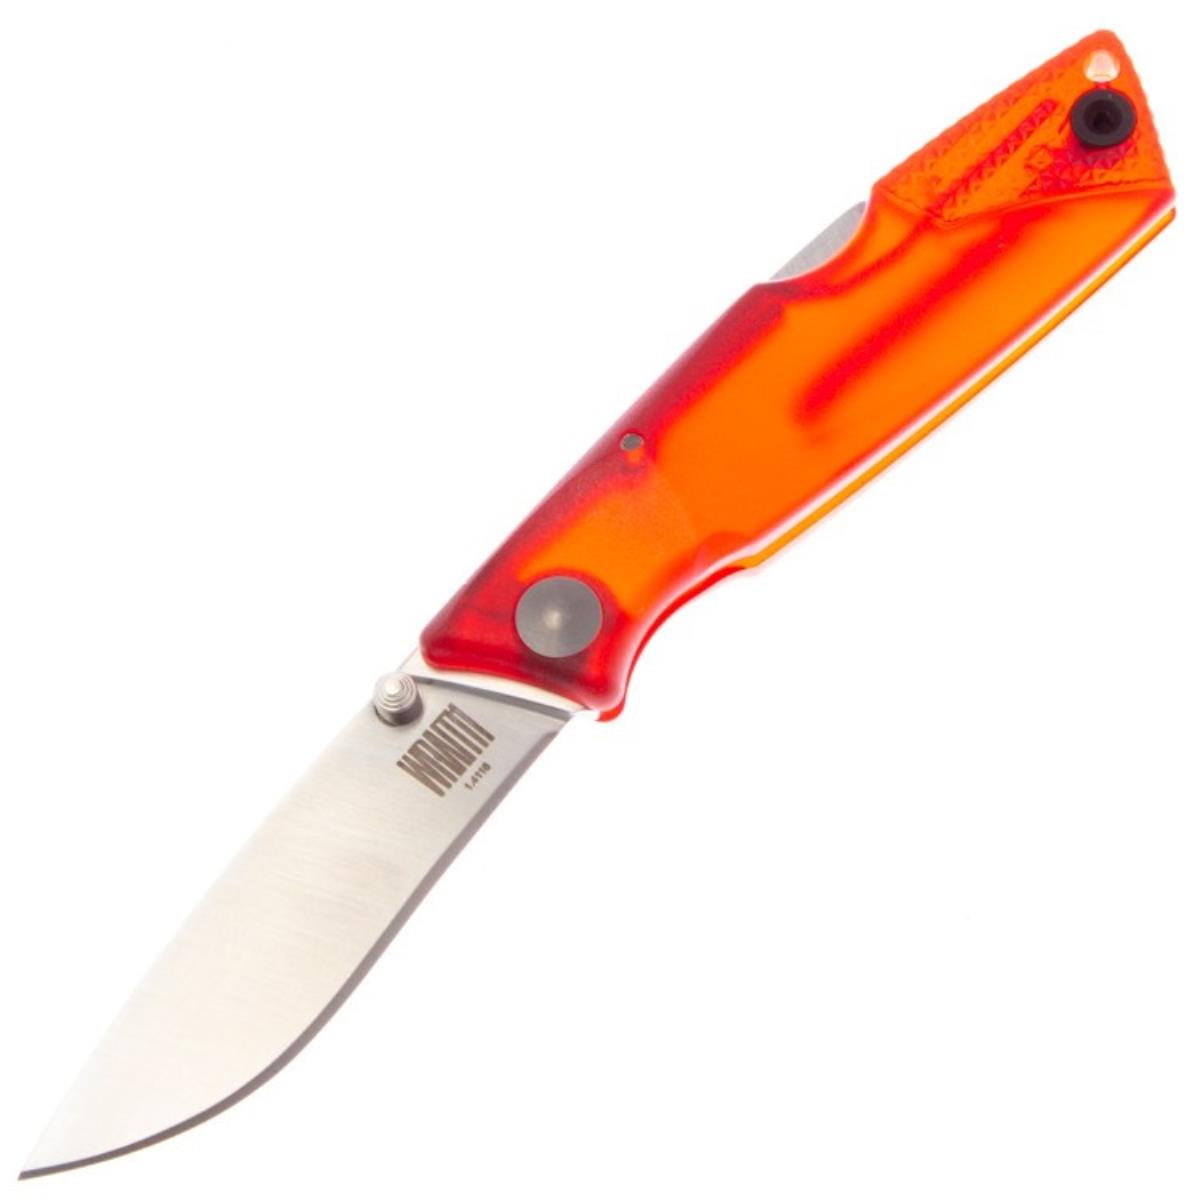 Нож Wraith Ice Series Fire складн.,красная полимерная рукоять, клинок AUS8 (8798RED)  ONTARIO нож carter trinity складн чёрная рукоять титан g10 клинок aus8 8877 ontario